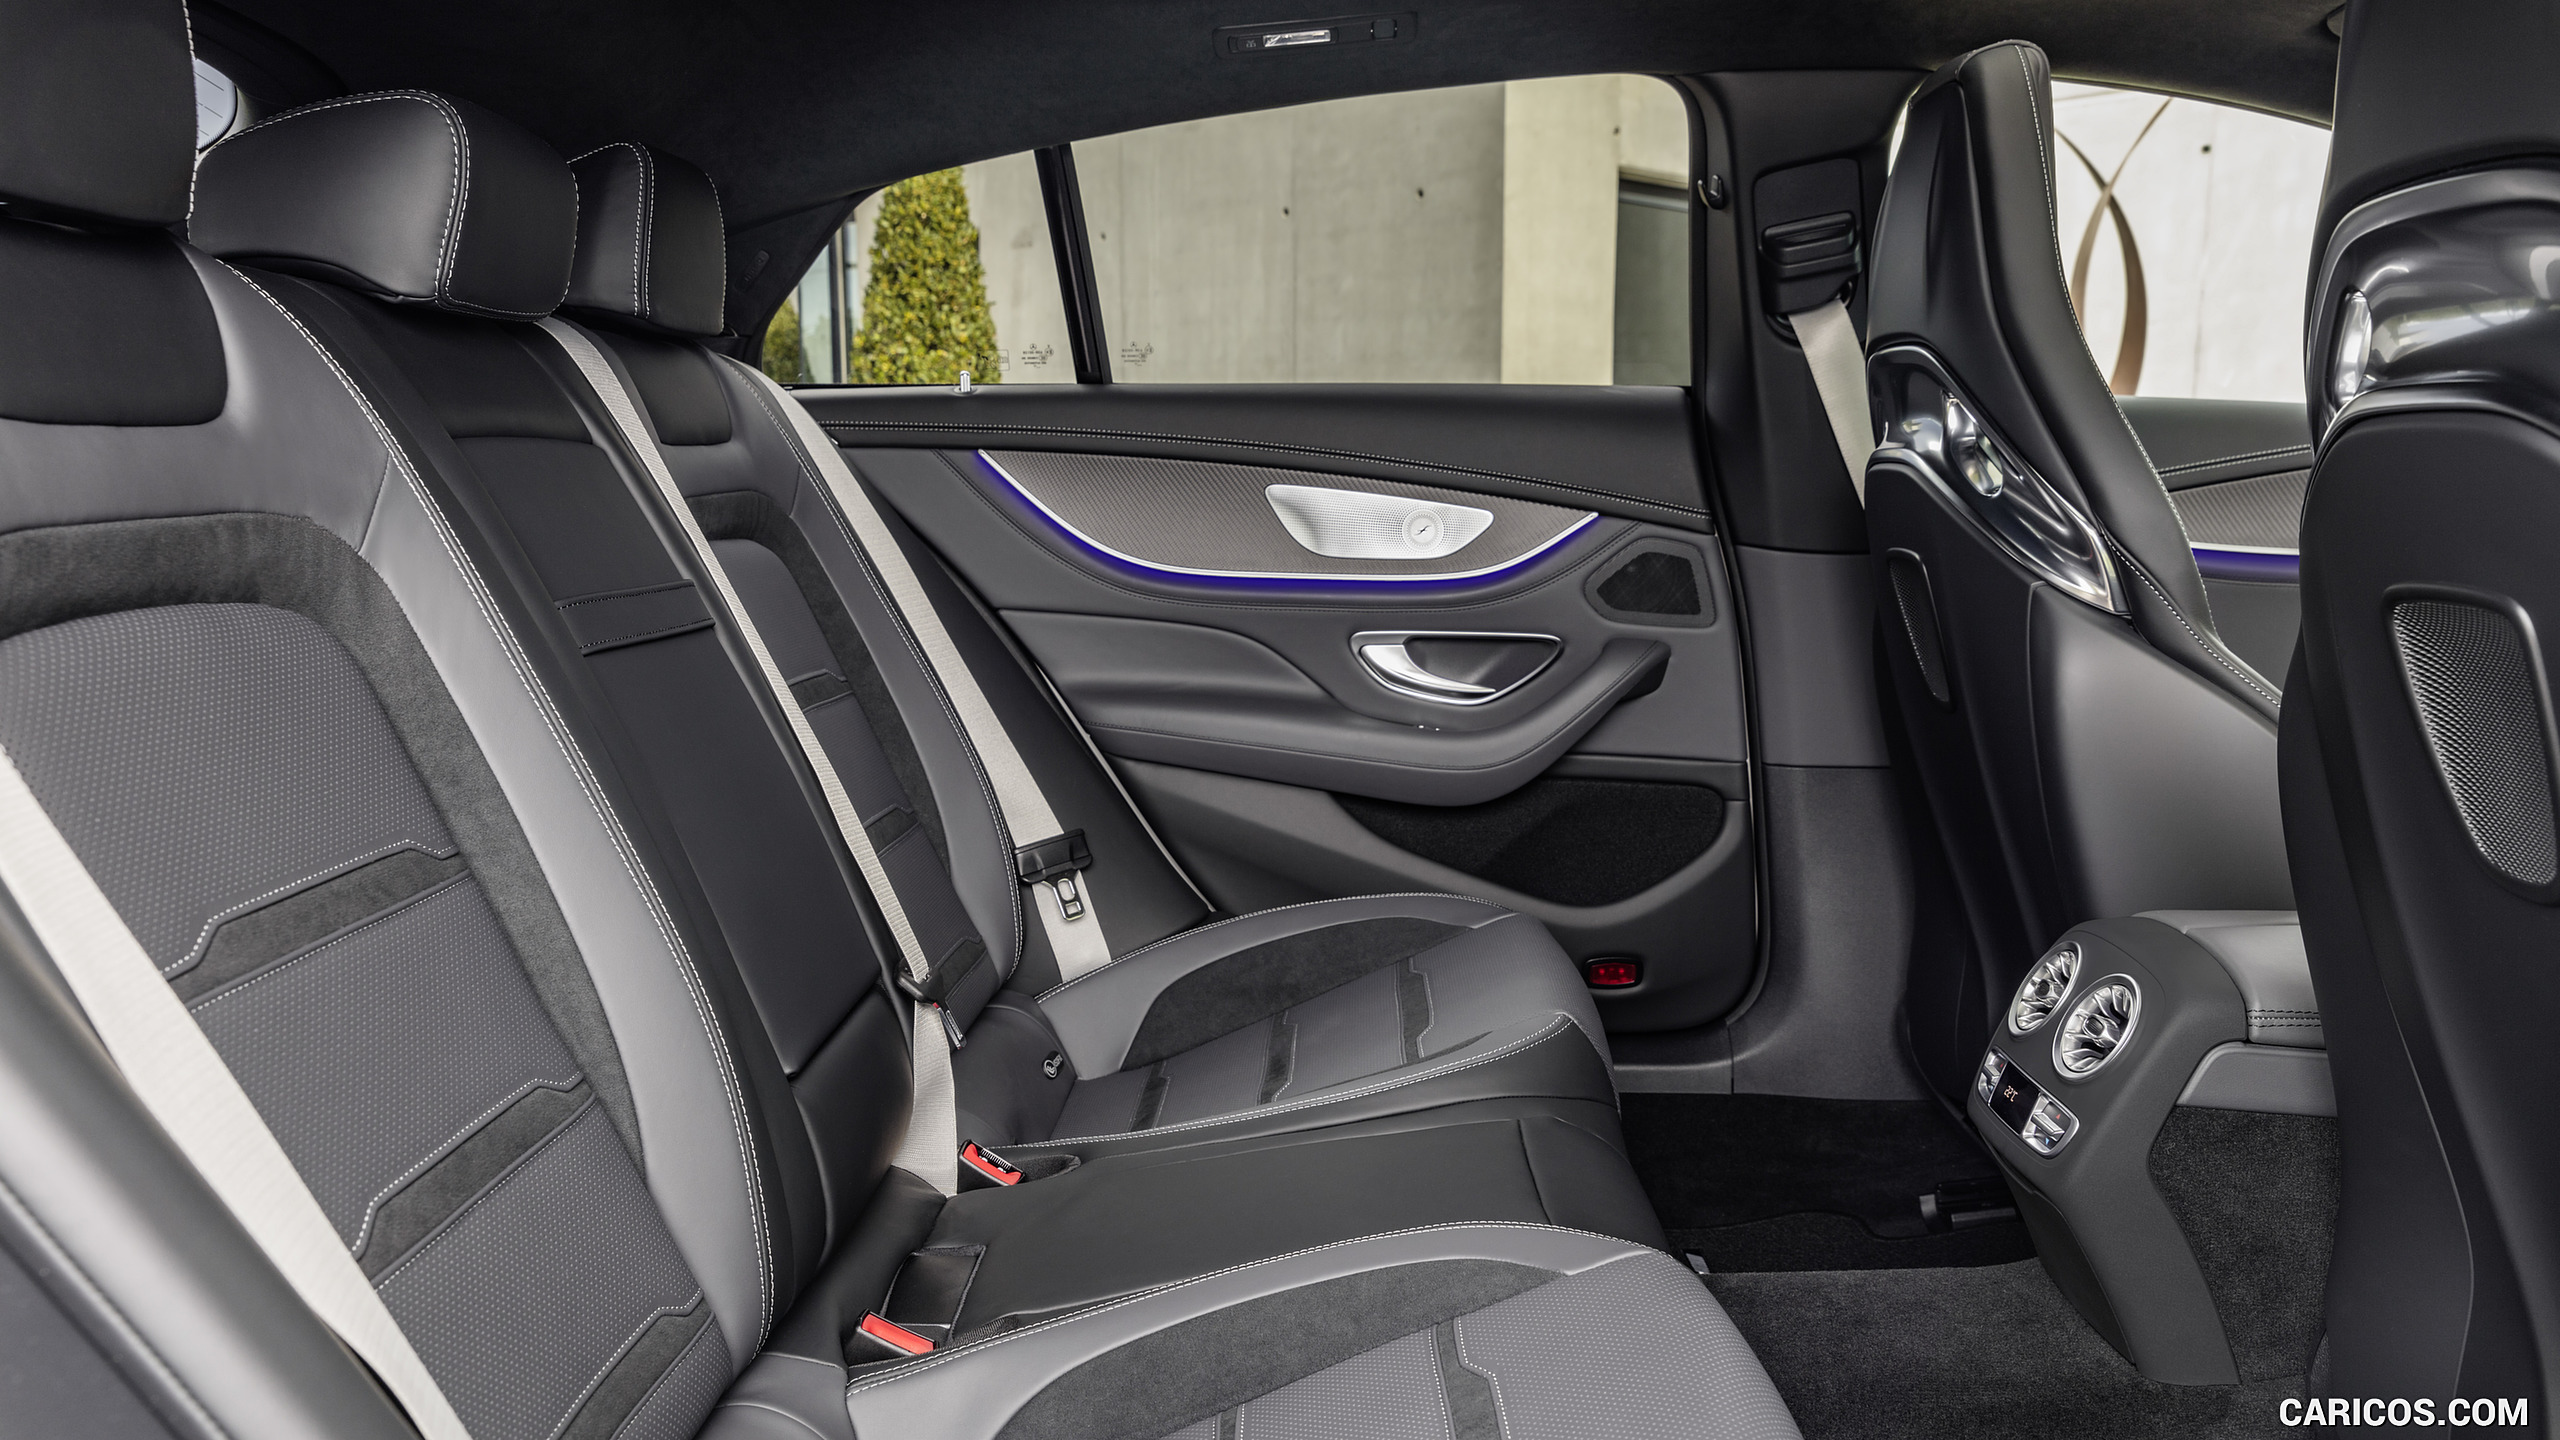 2019 Mercedes-AMG GT 53 4MATIC+ 4-Door Coupe - Interior, Rear Seats, #73 of 427